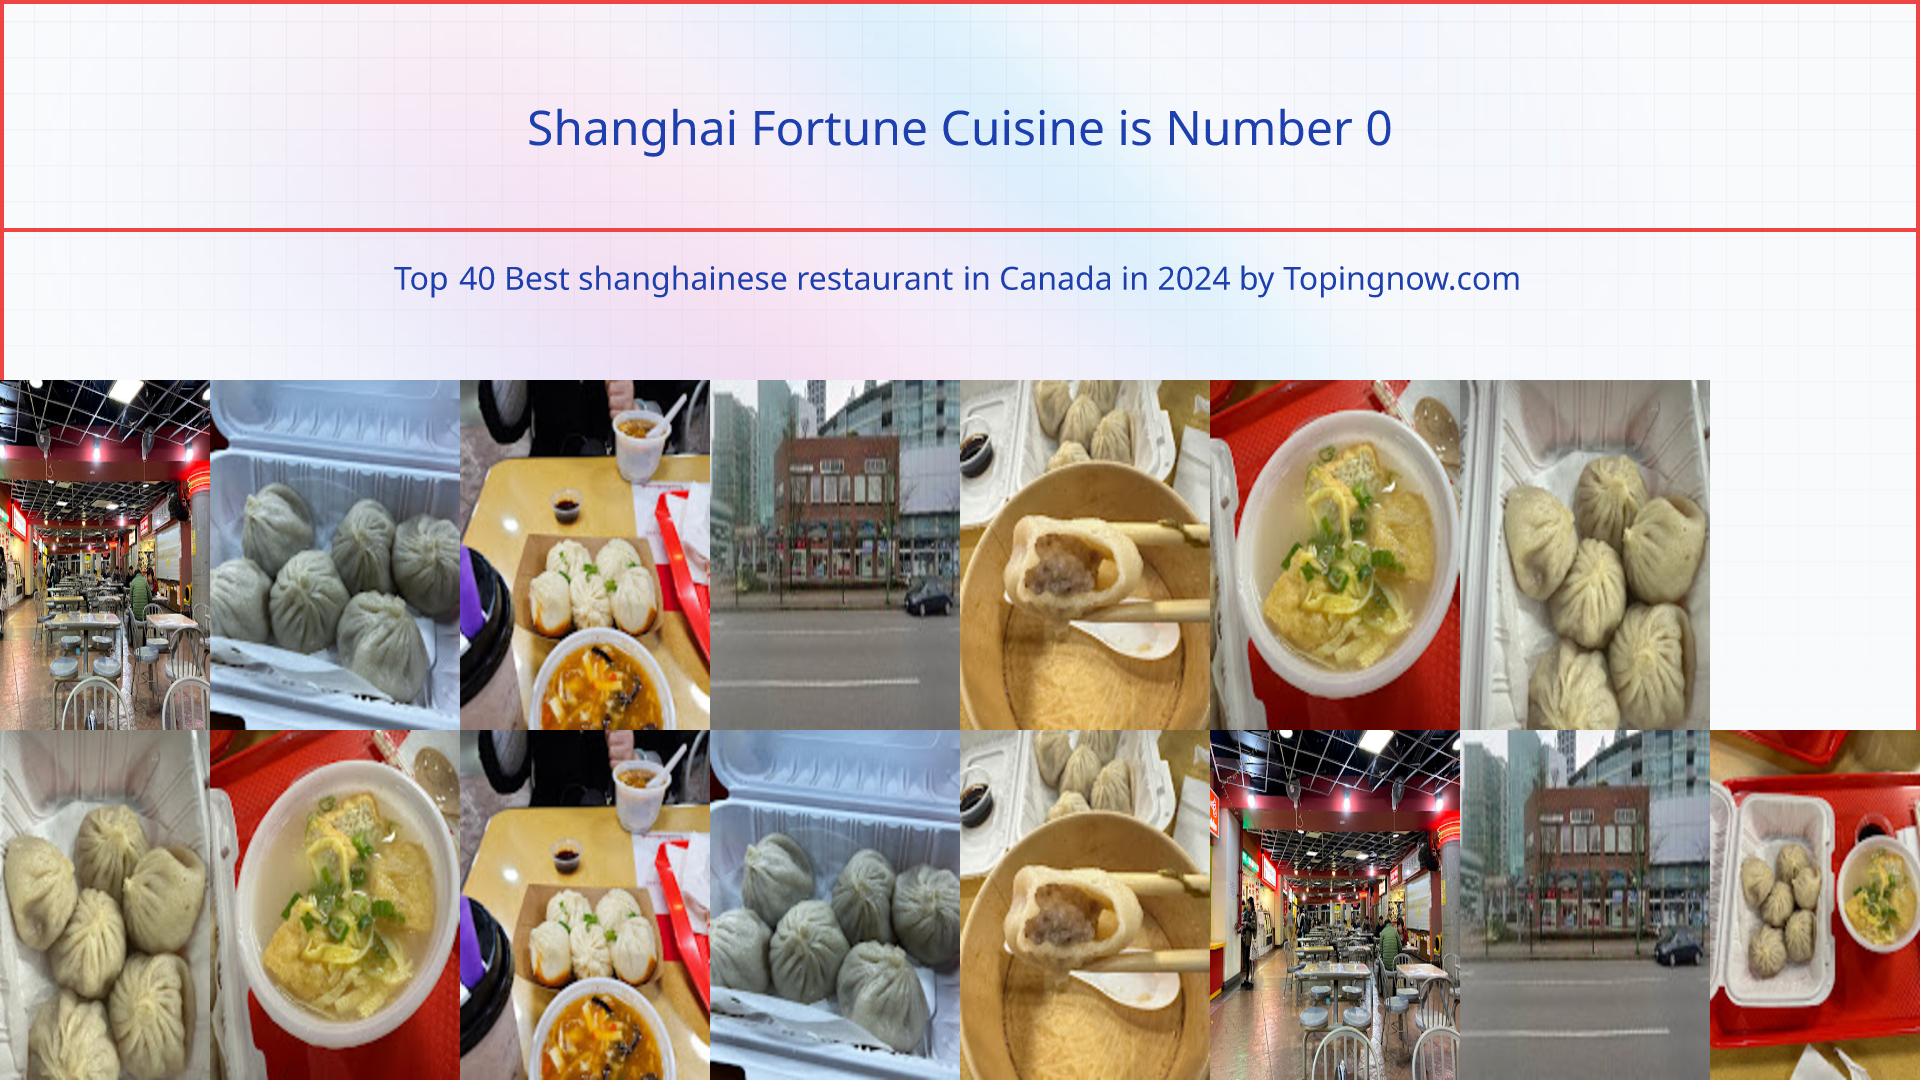 Shanghai Fortune Cuisine: Top 40 Best shanghainese restaurant in Canada in 2024